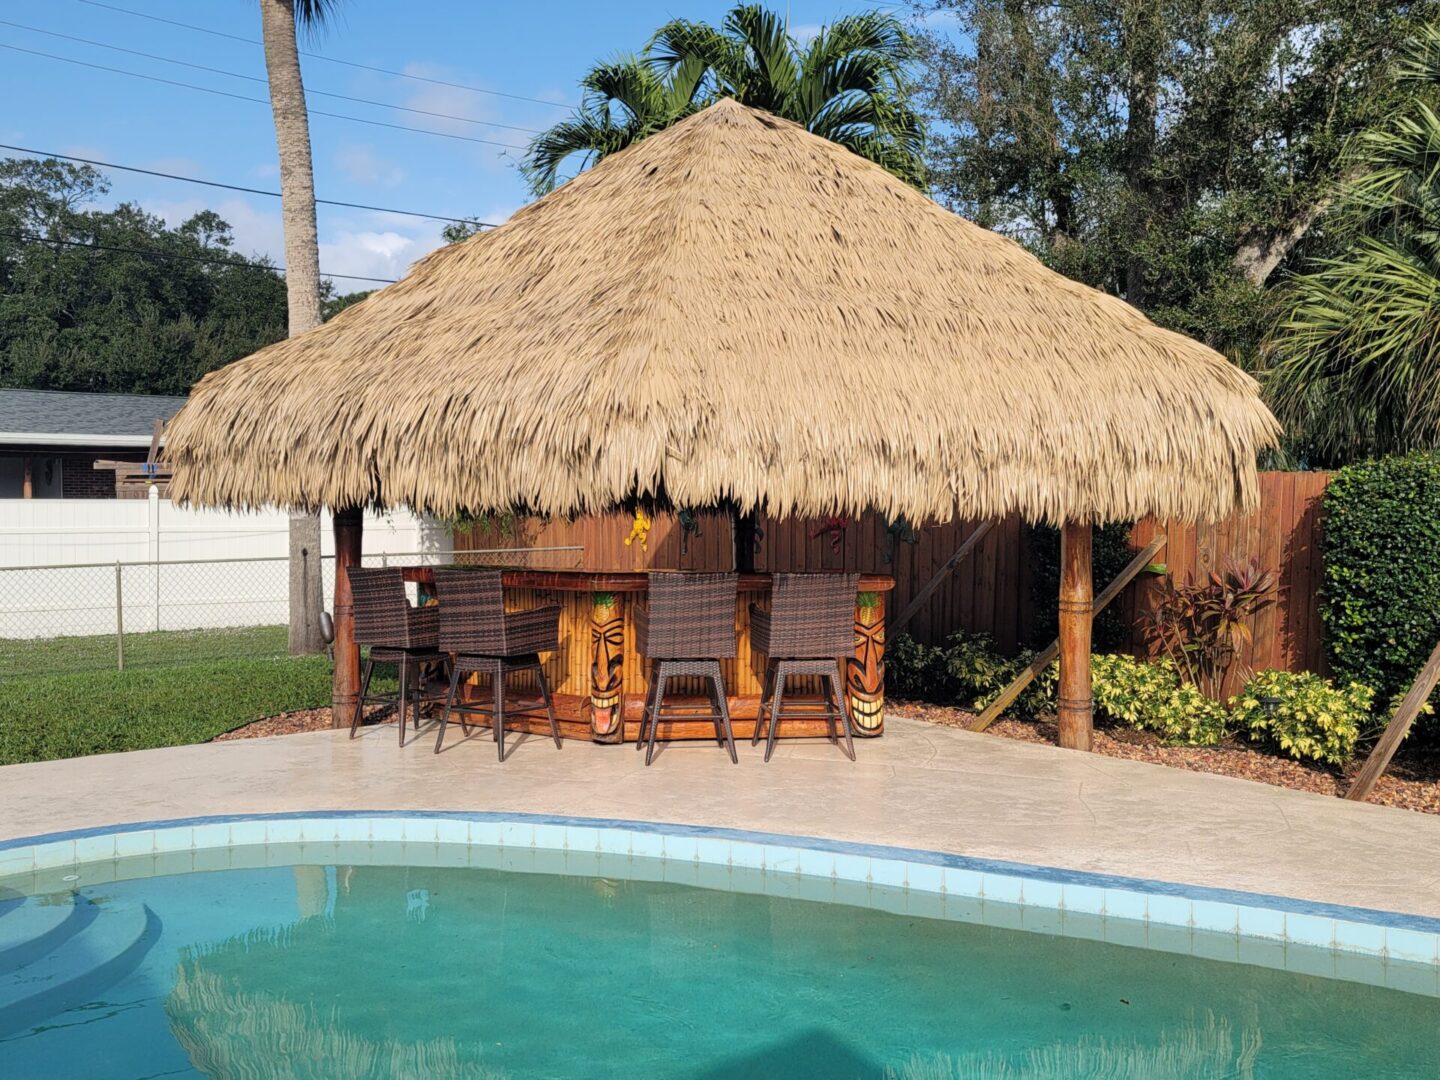 A tiki hut next to a pool.